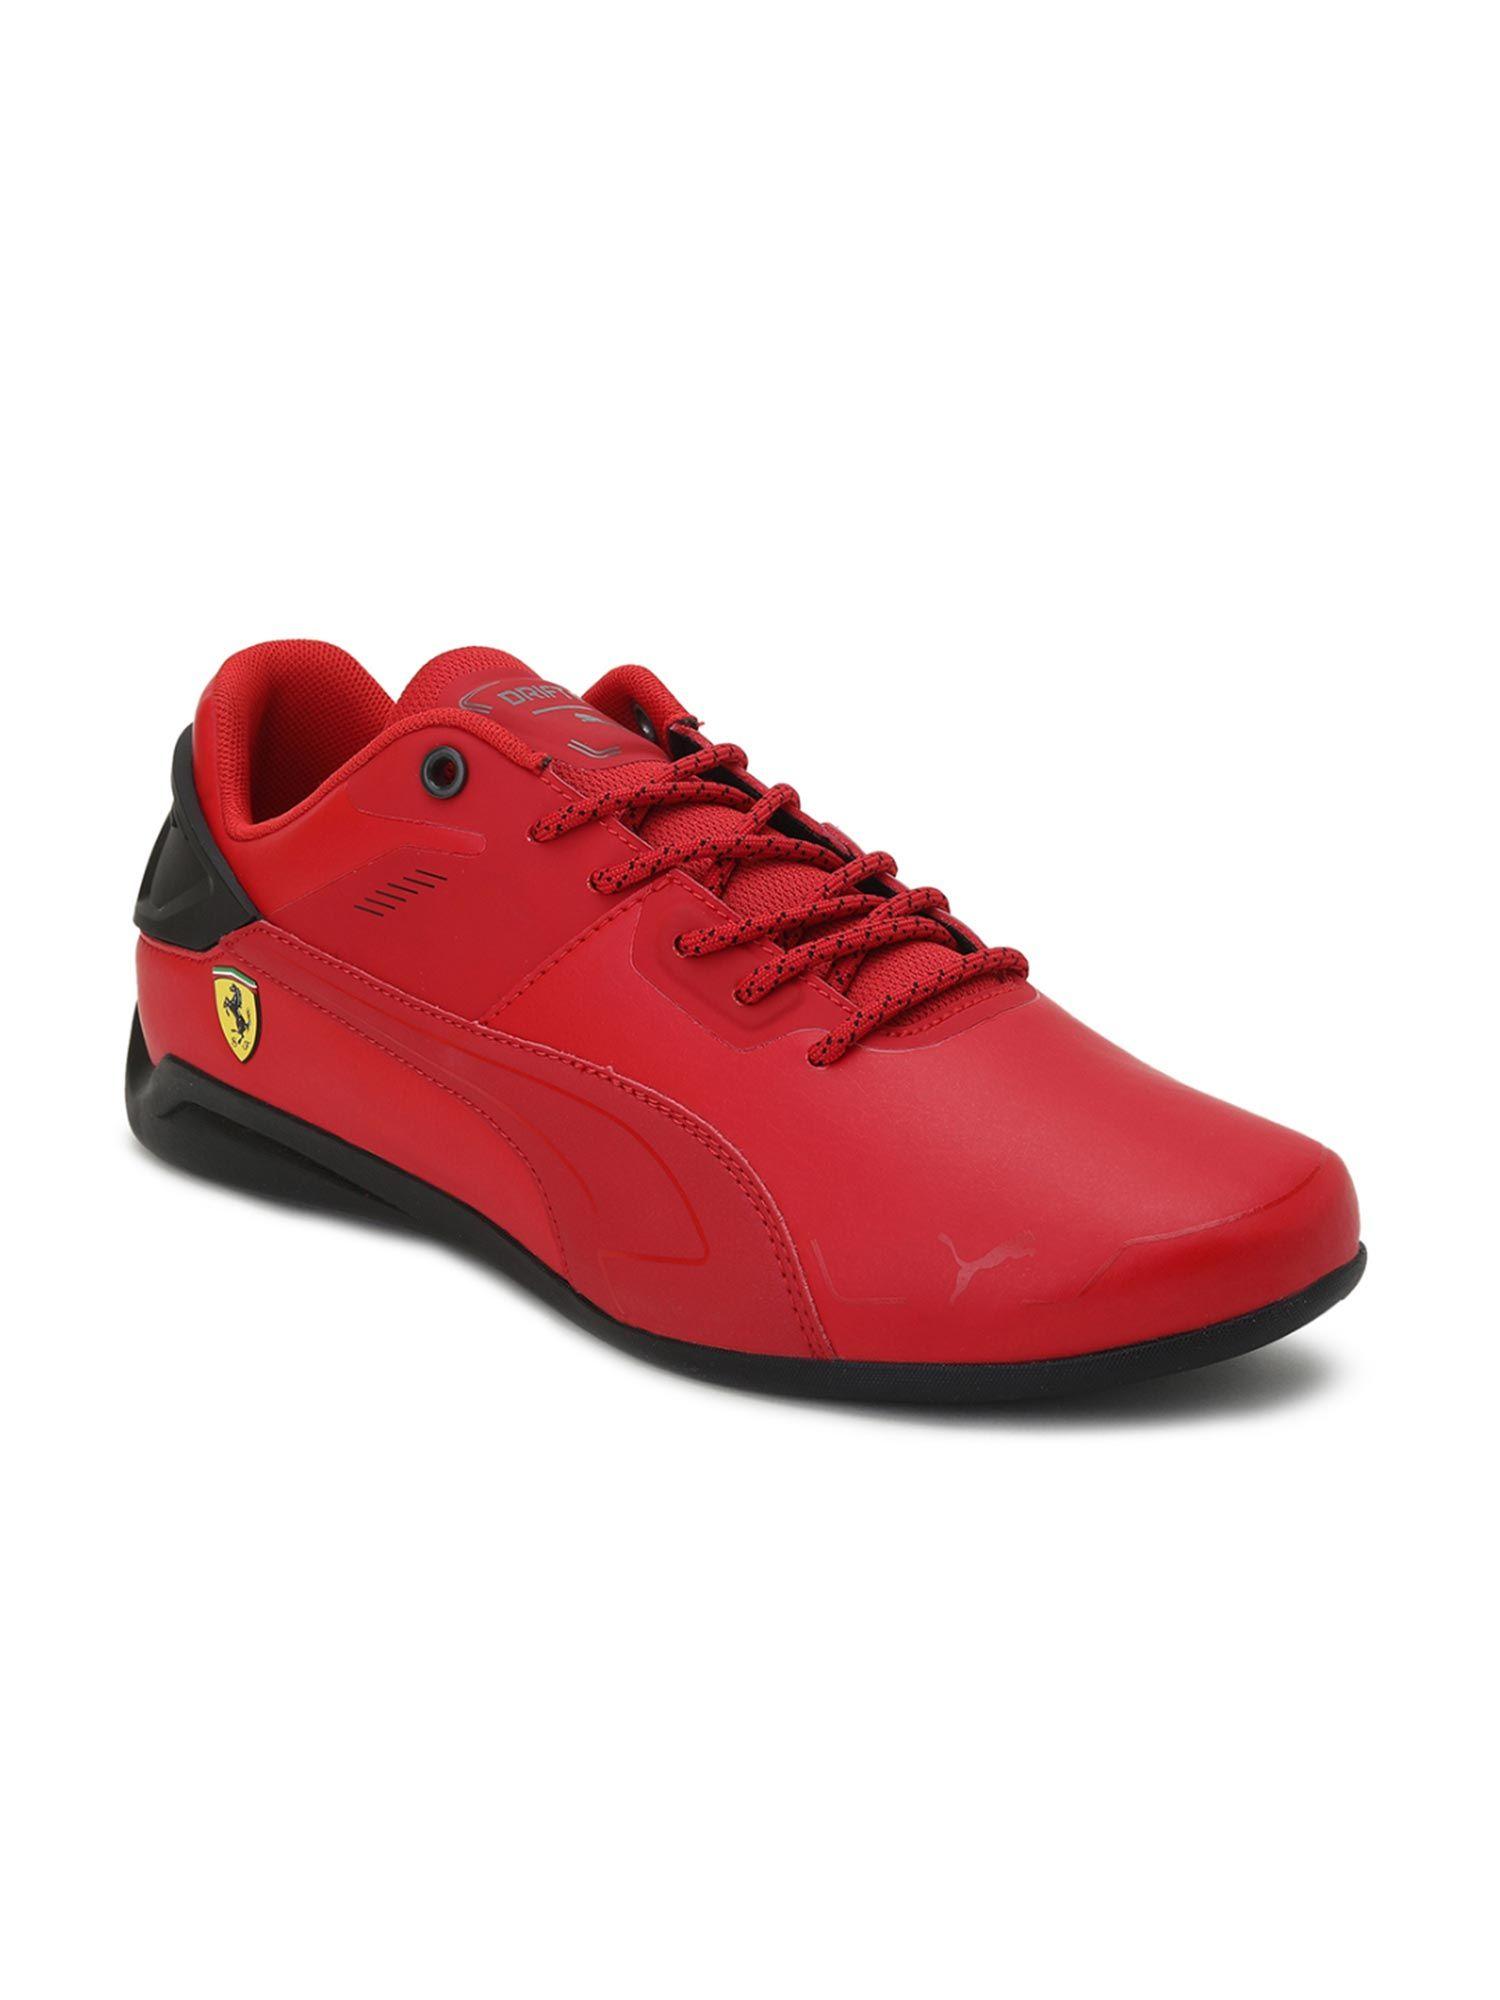 ferrari-motorsport-drift-cat-unisex-red-casual-shoes